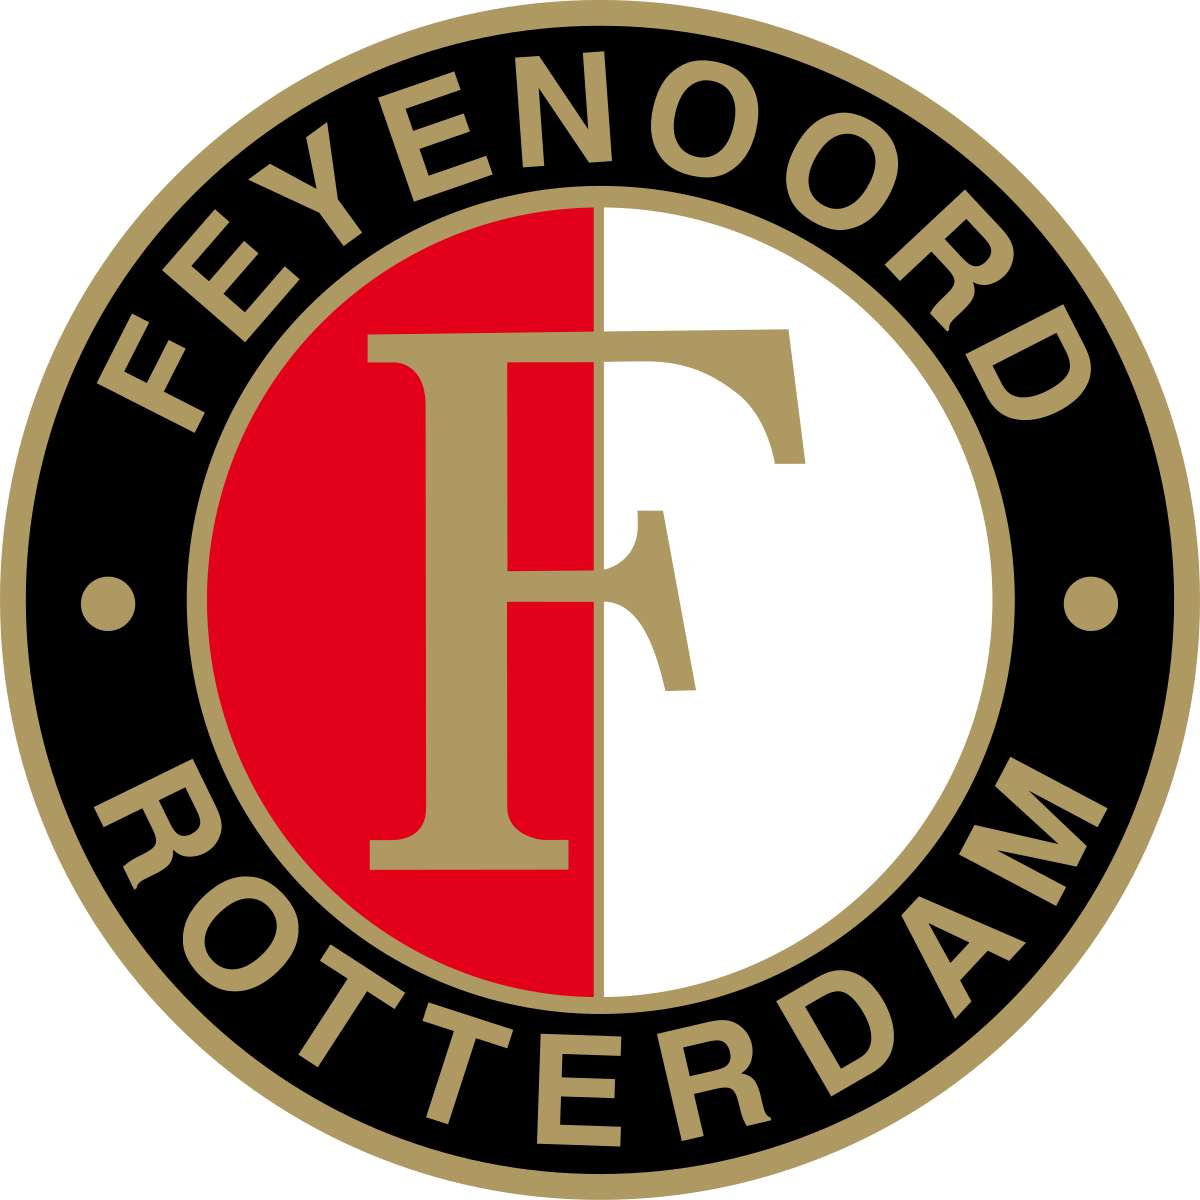 Quebra-cabeça do Feyenoord puzzle online a partir de fotografia